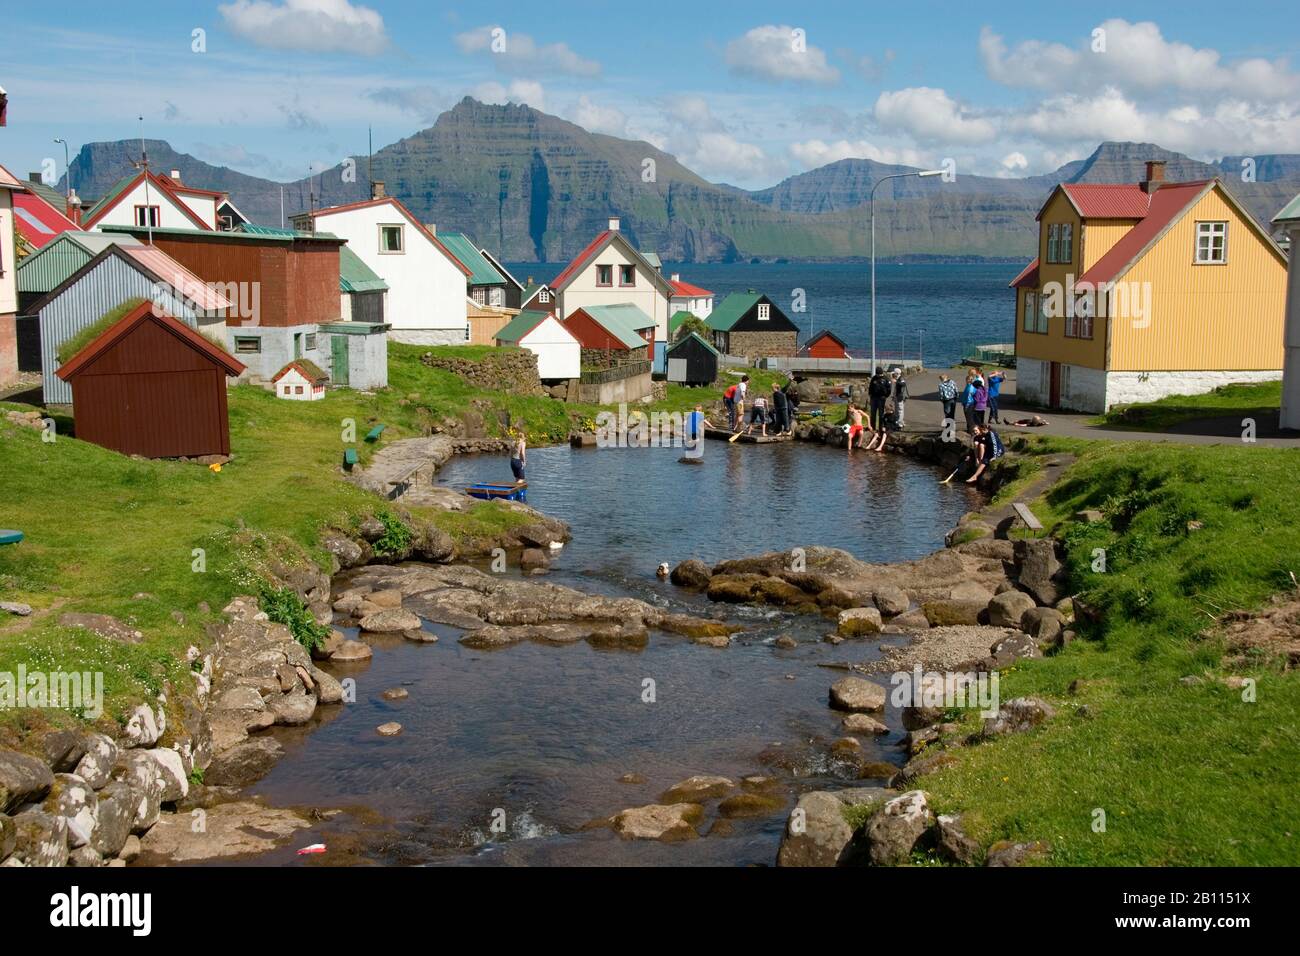 village Gjogv im Daladalur, Denmark, Faroe Islands, Esturoy Stock Photo